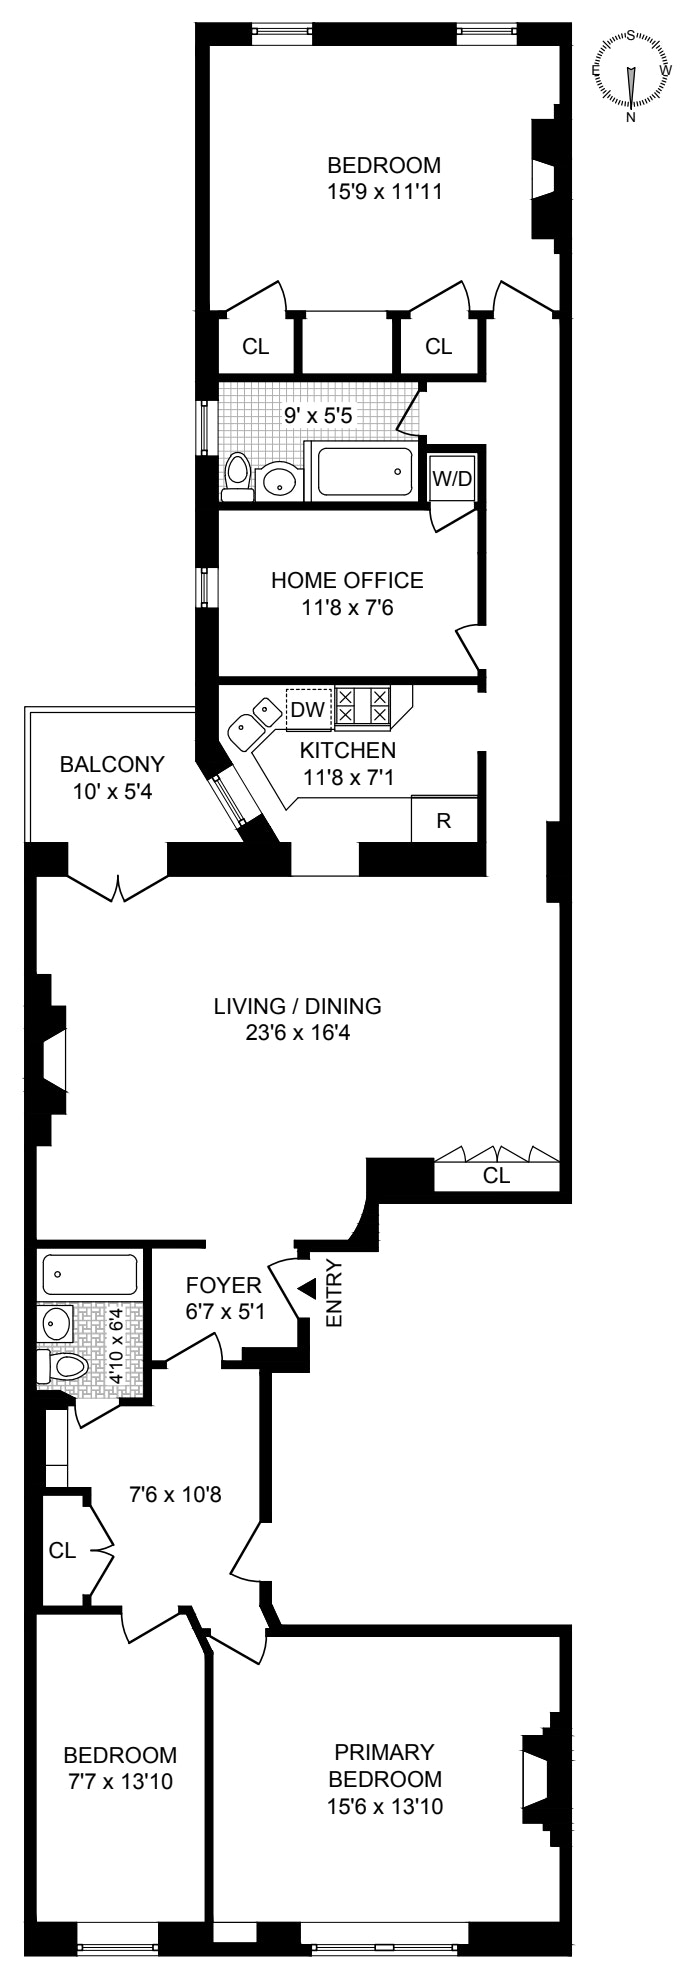 Floorplan for 90 Remsen Street, 3AB